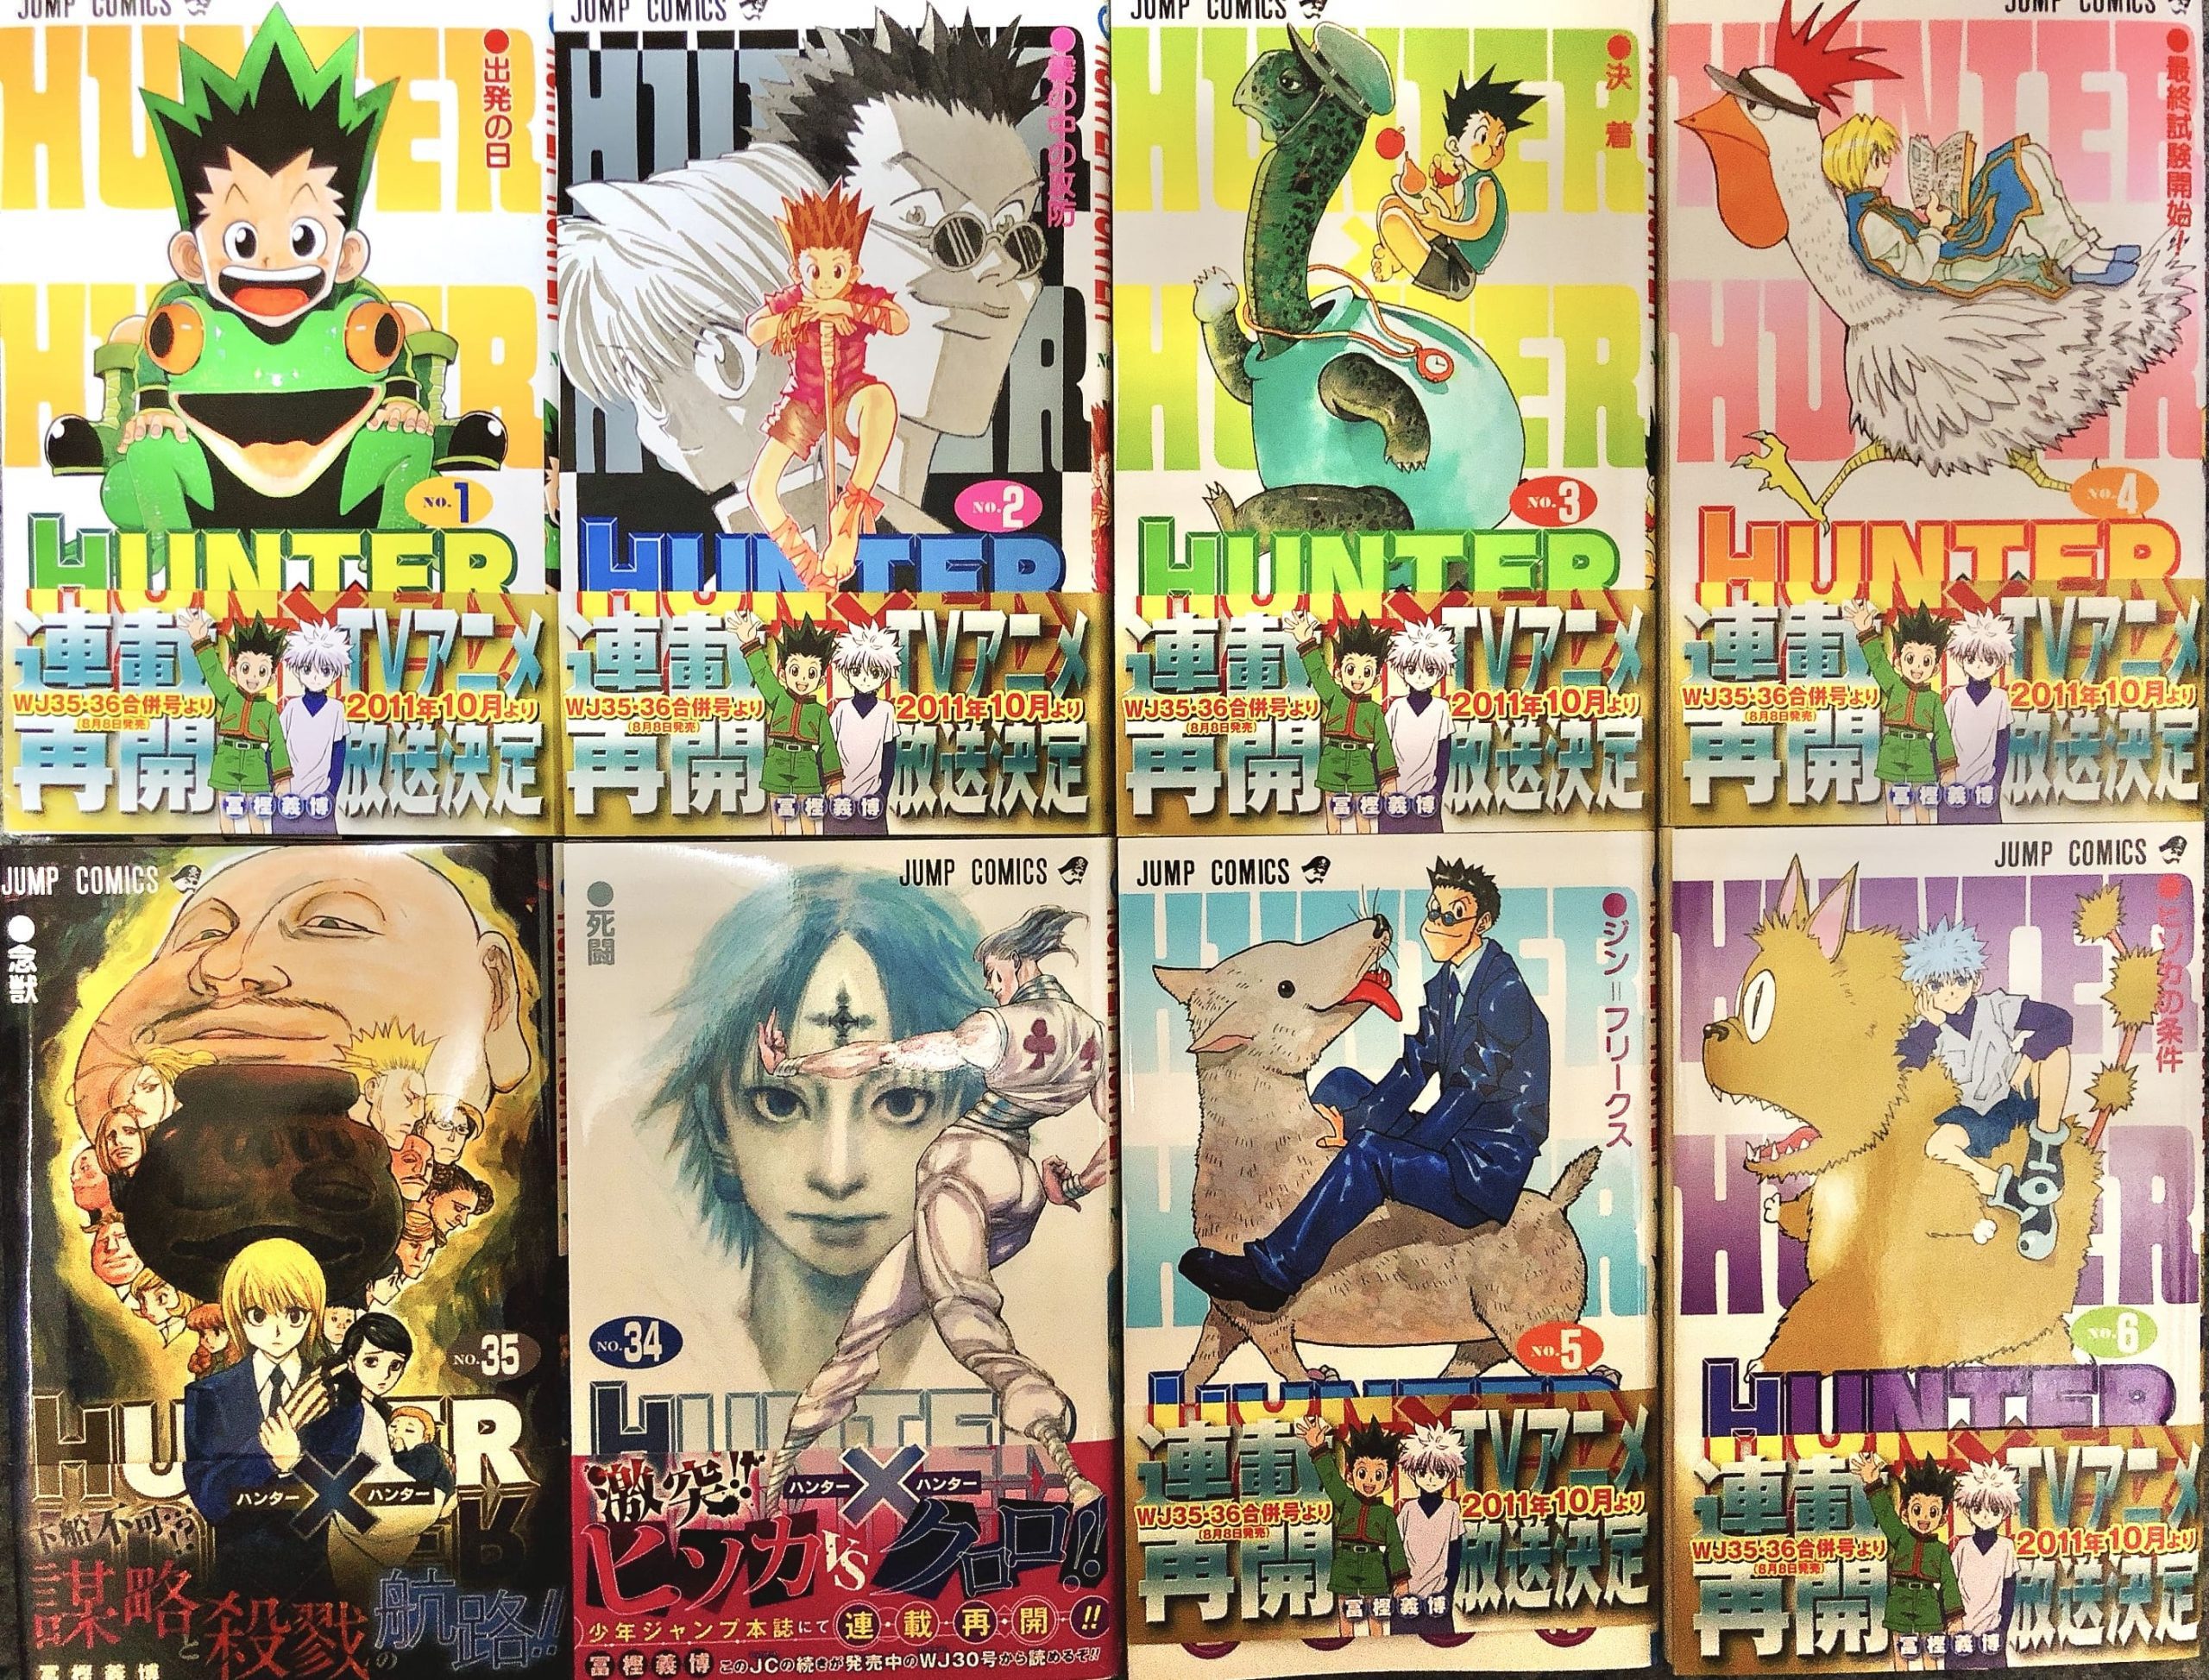 10 Manga from Shueisha that you must read